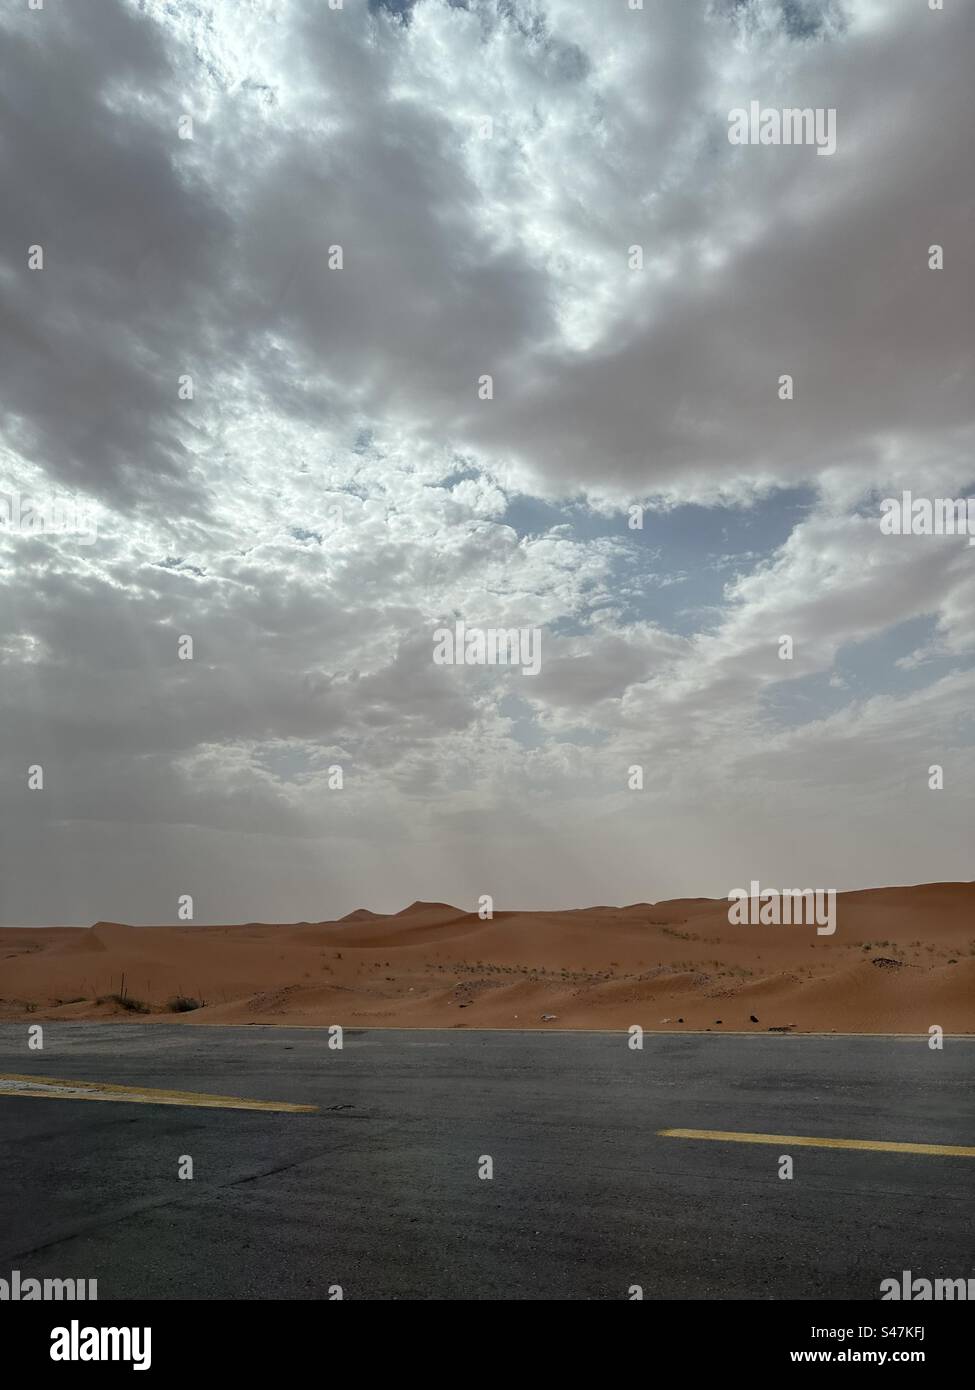 Saudi Arabia - Al-Ahsa Governorate, cloudy weather in desert view 17 April 2023 Stock Photo